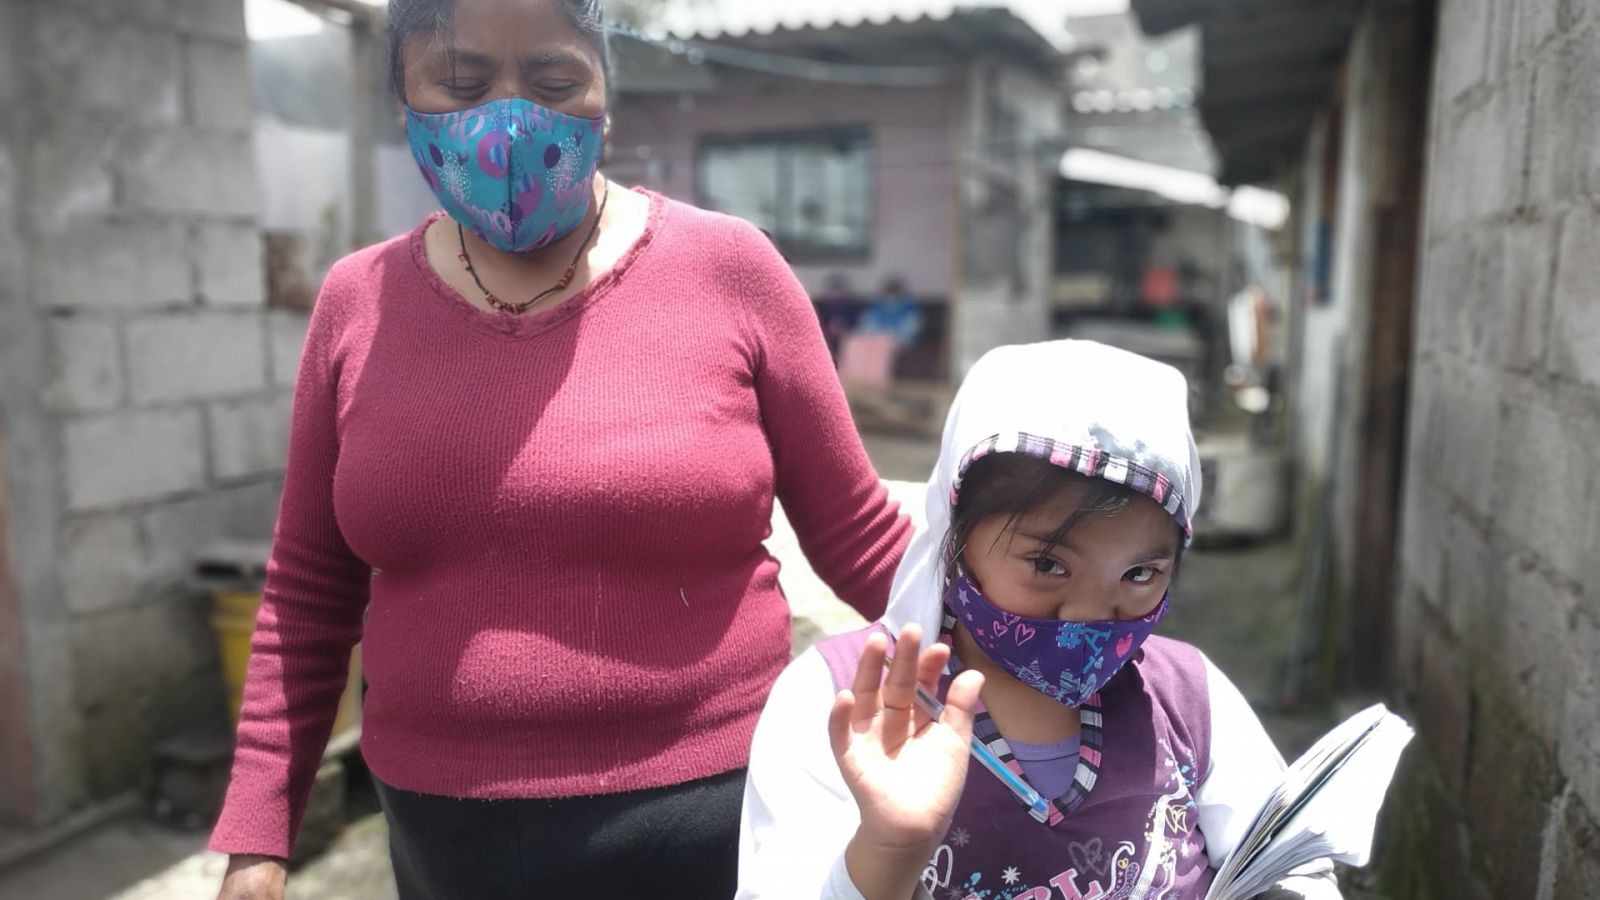 Cinco continentes - Ecuador: más pobreza en pandemia - Escuchar ahora